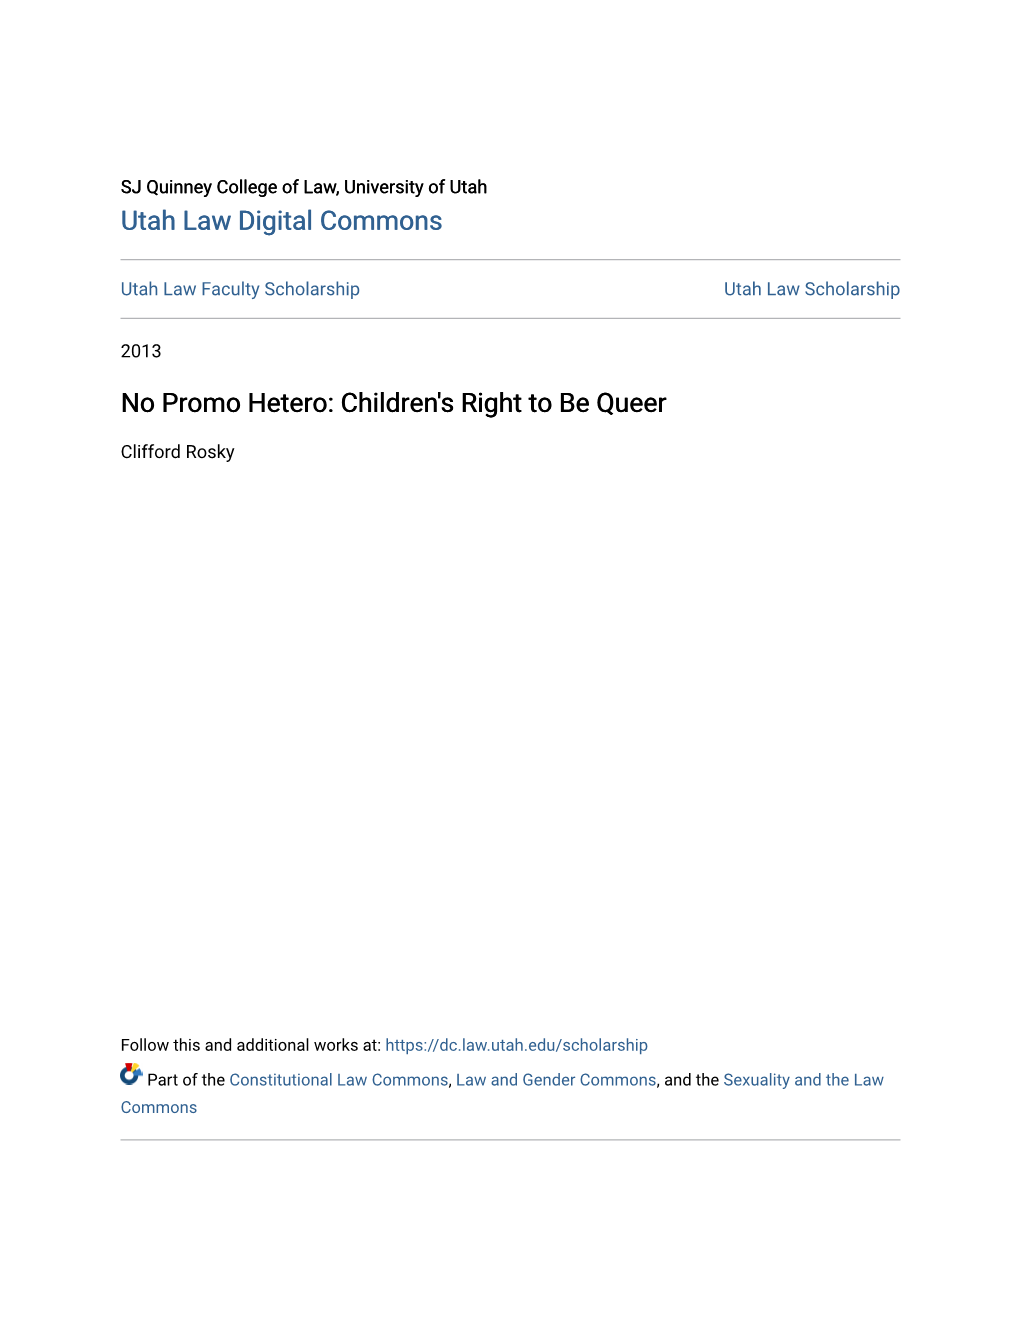 No Promo Hetero: Children's Right to Be Queer